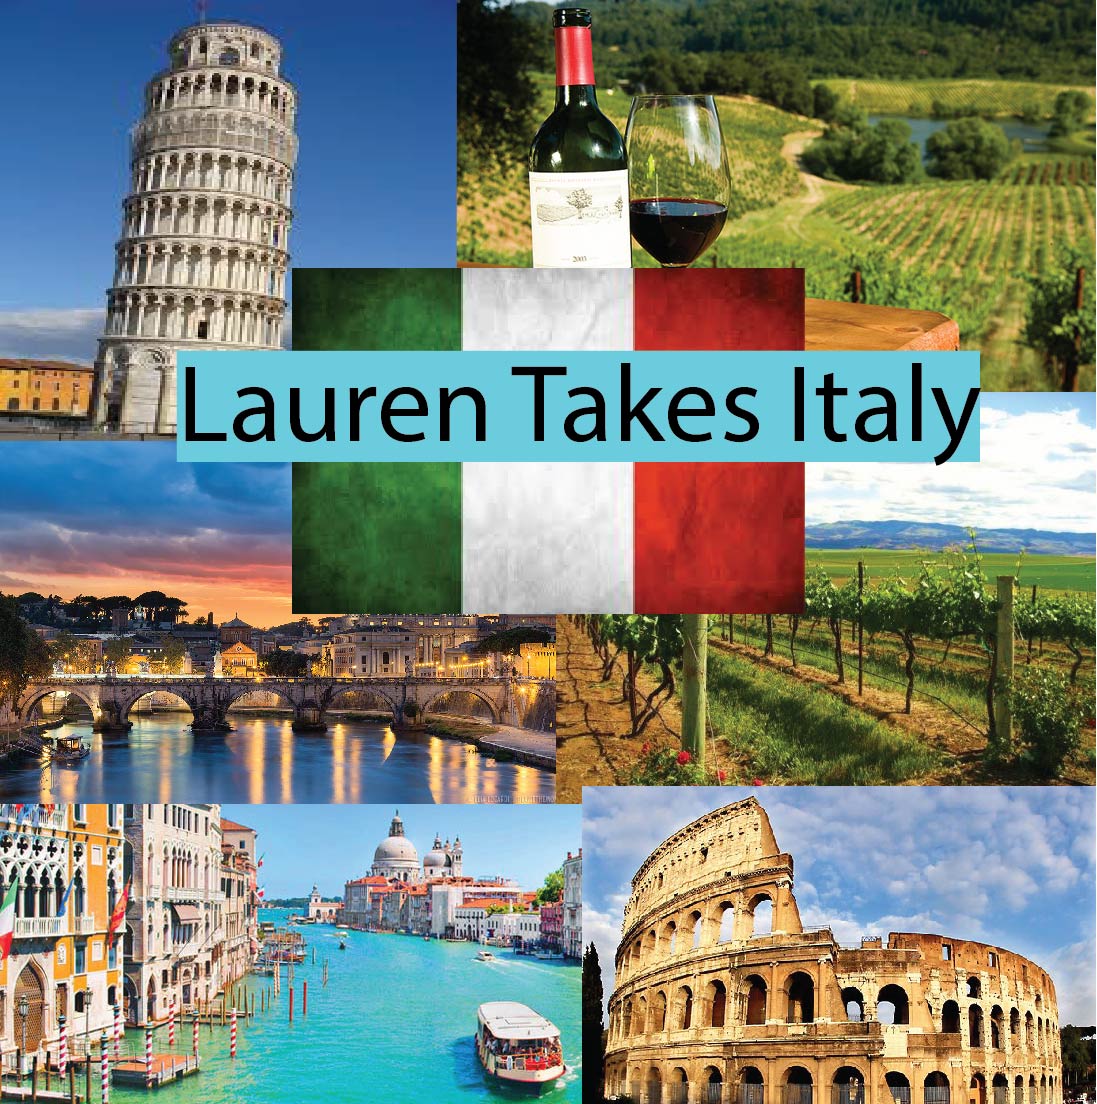 Lauren takes Italy